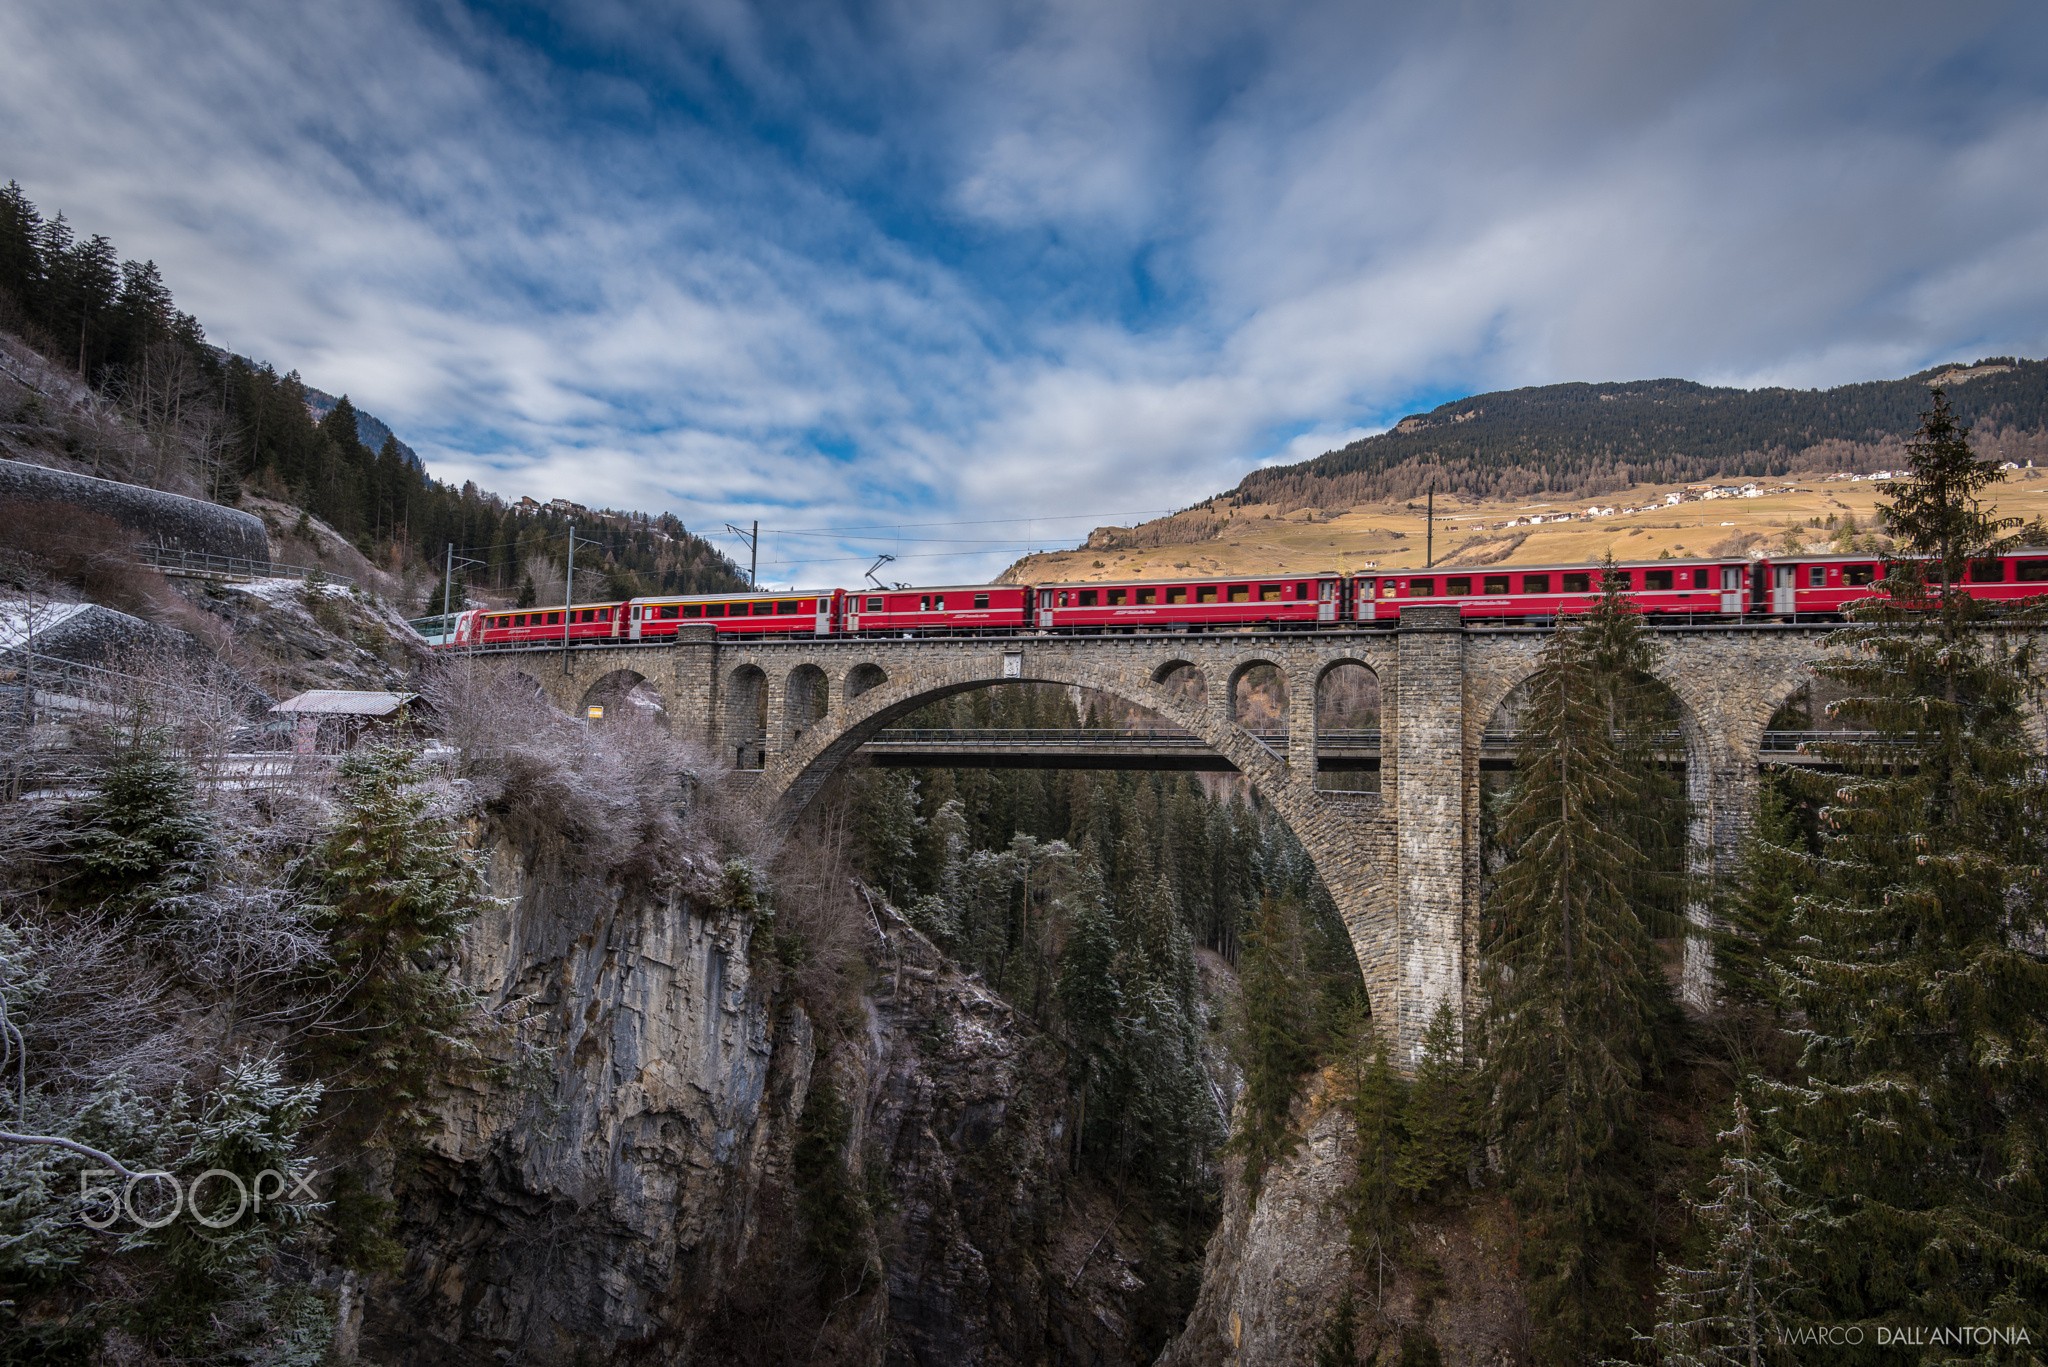 General 2048x1367 train bridge 500px watermarked vehicle landscape nature Switzerland viaduct mountains